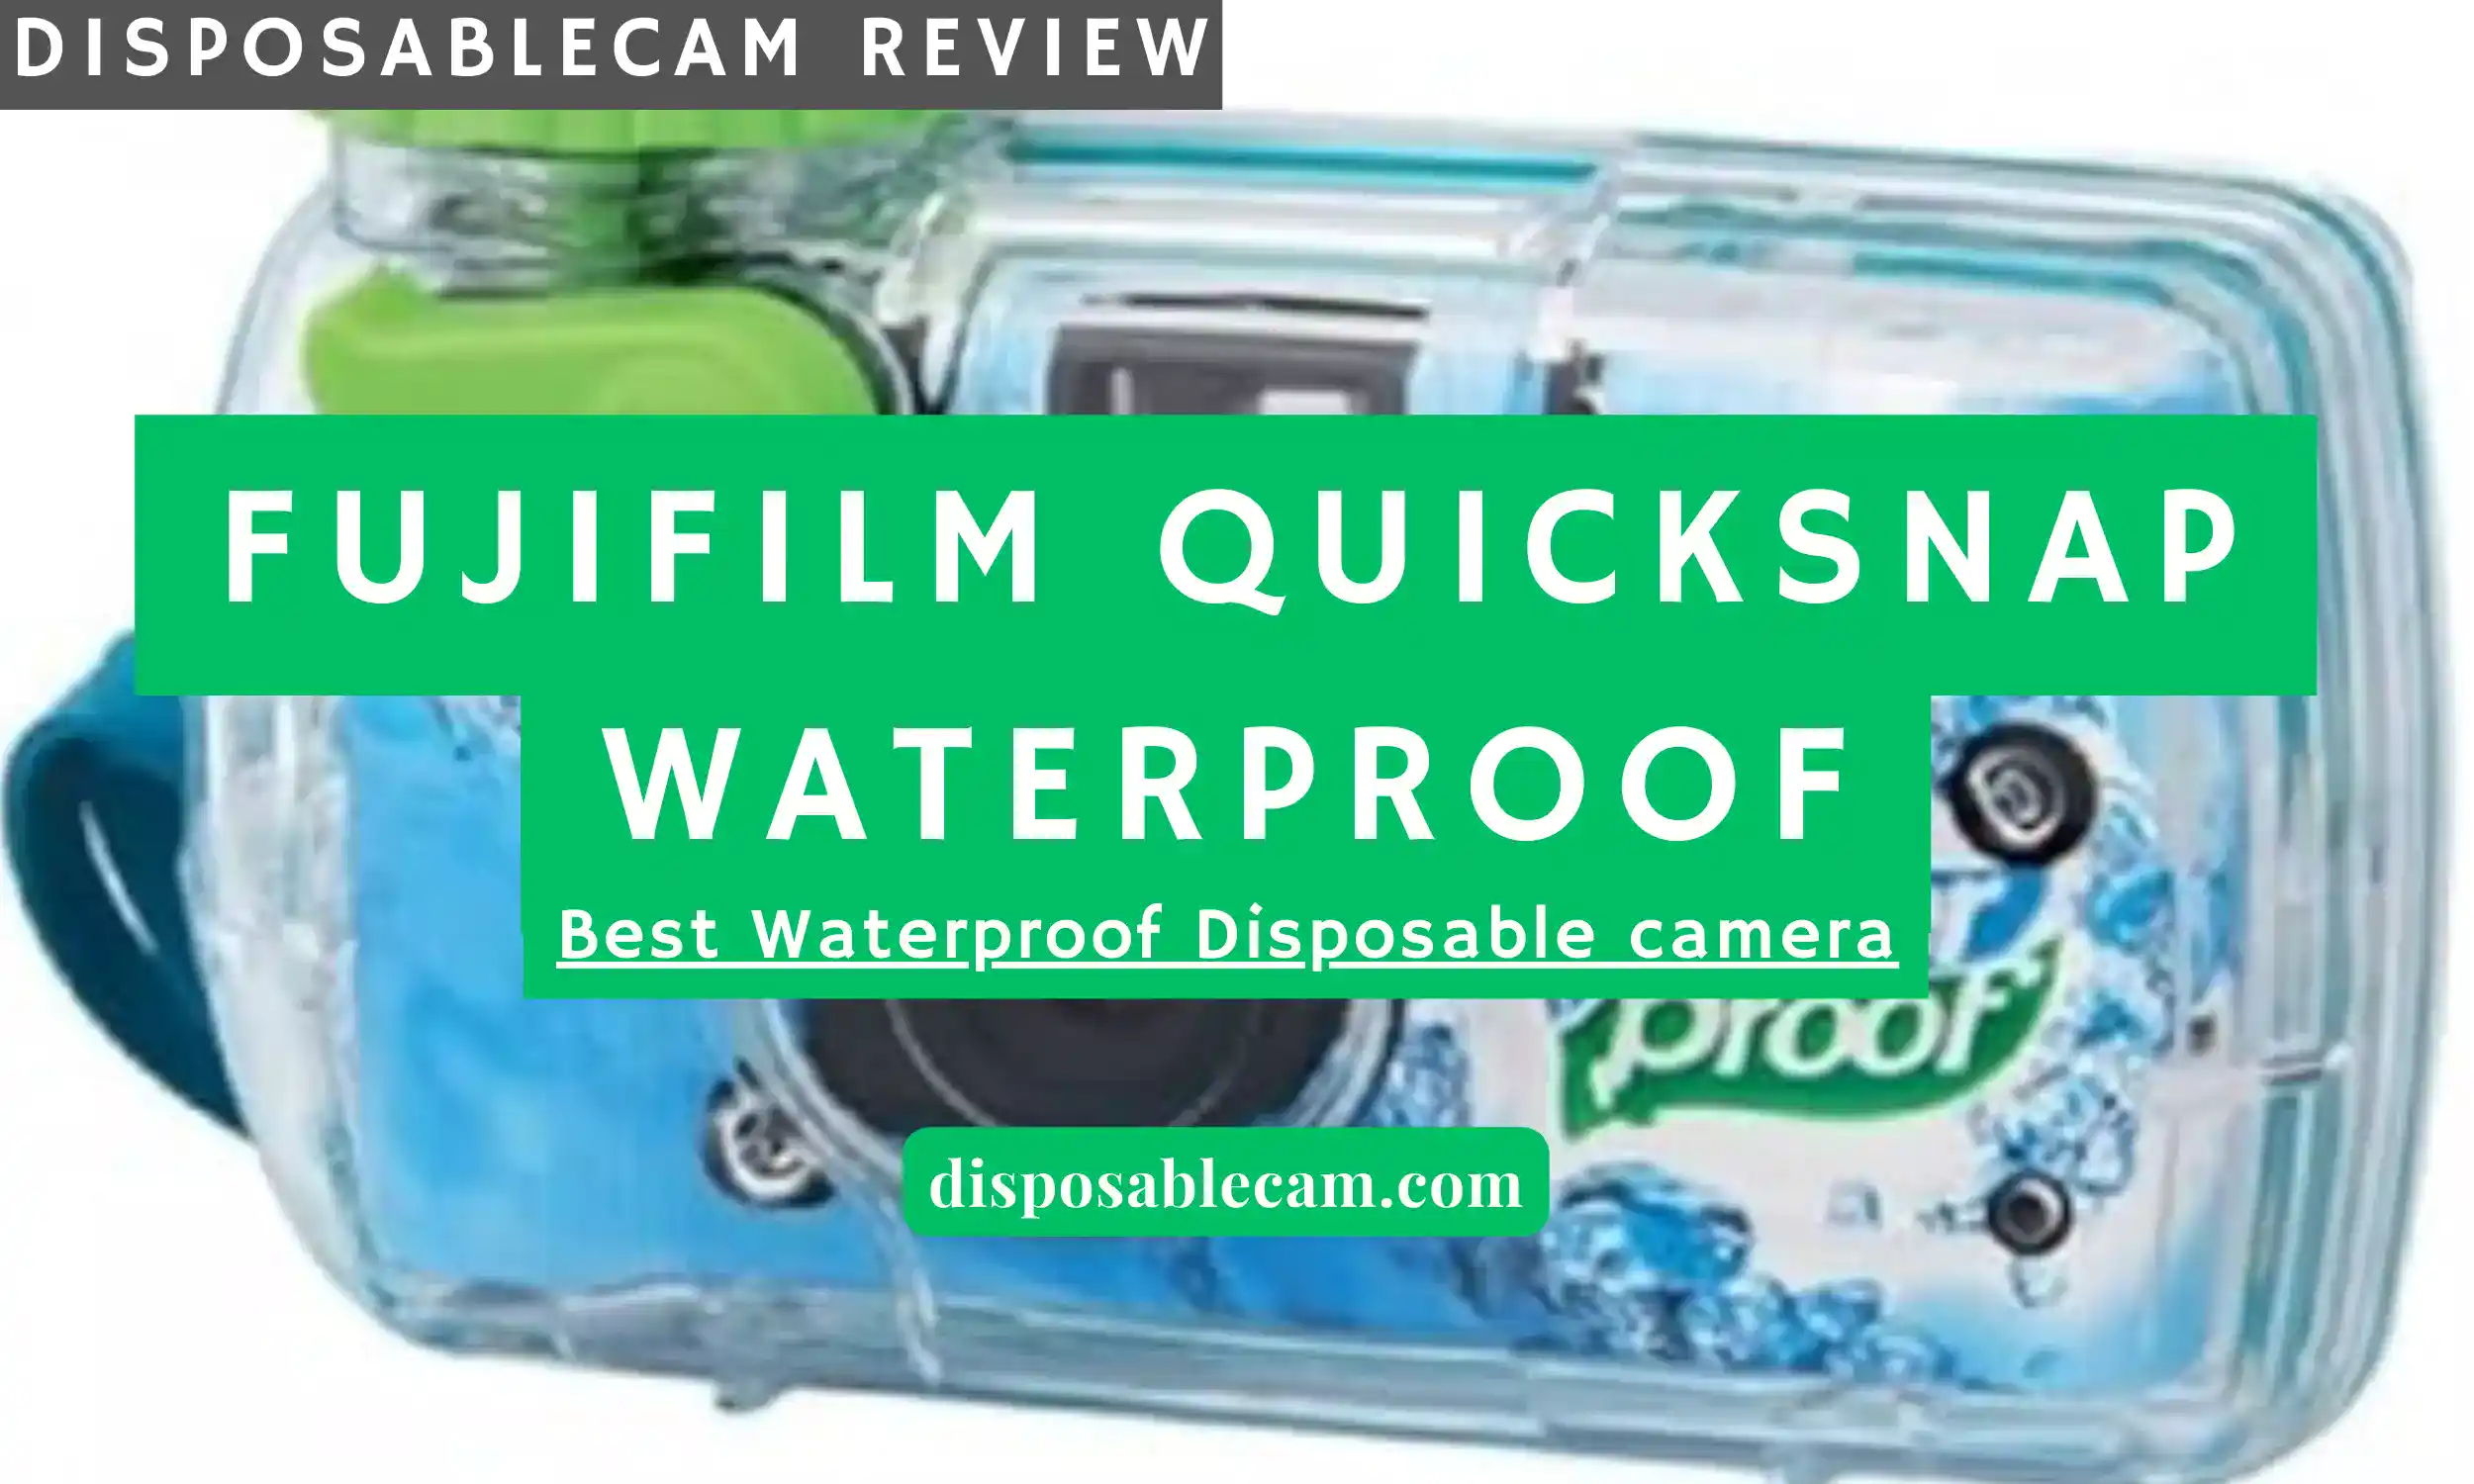 Fujifilm Quicksnap Waterproof. The best underwater disposable camera